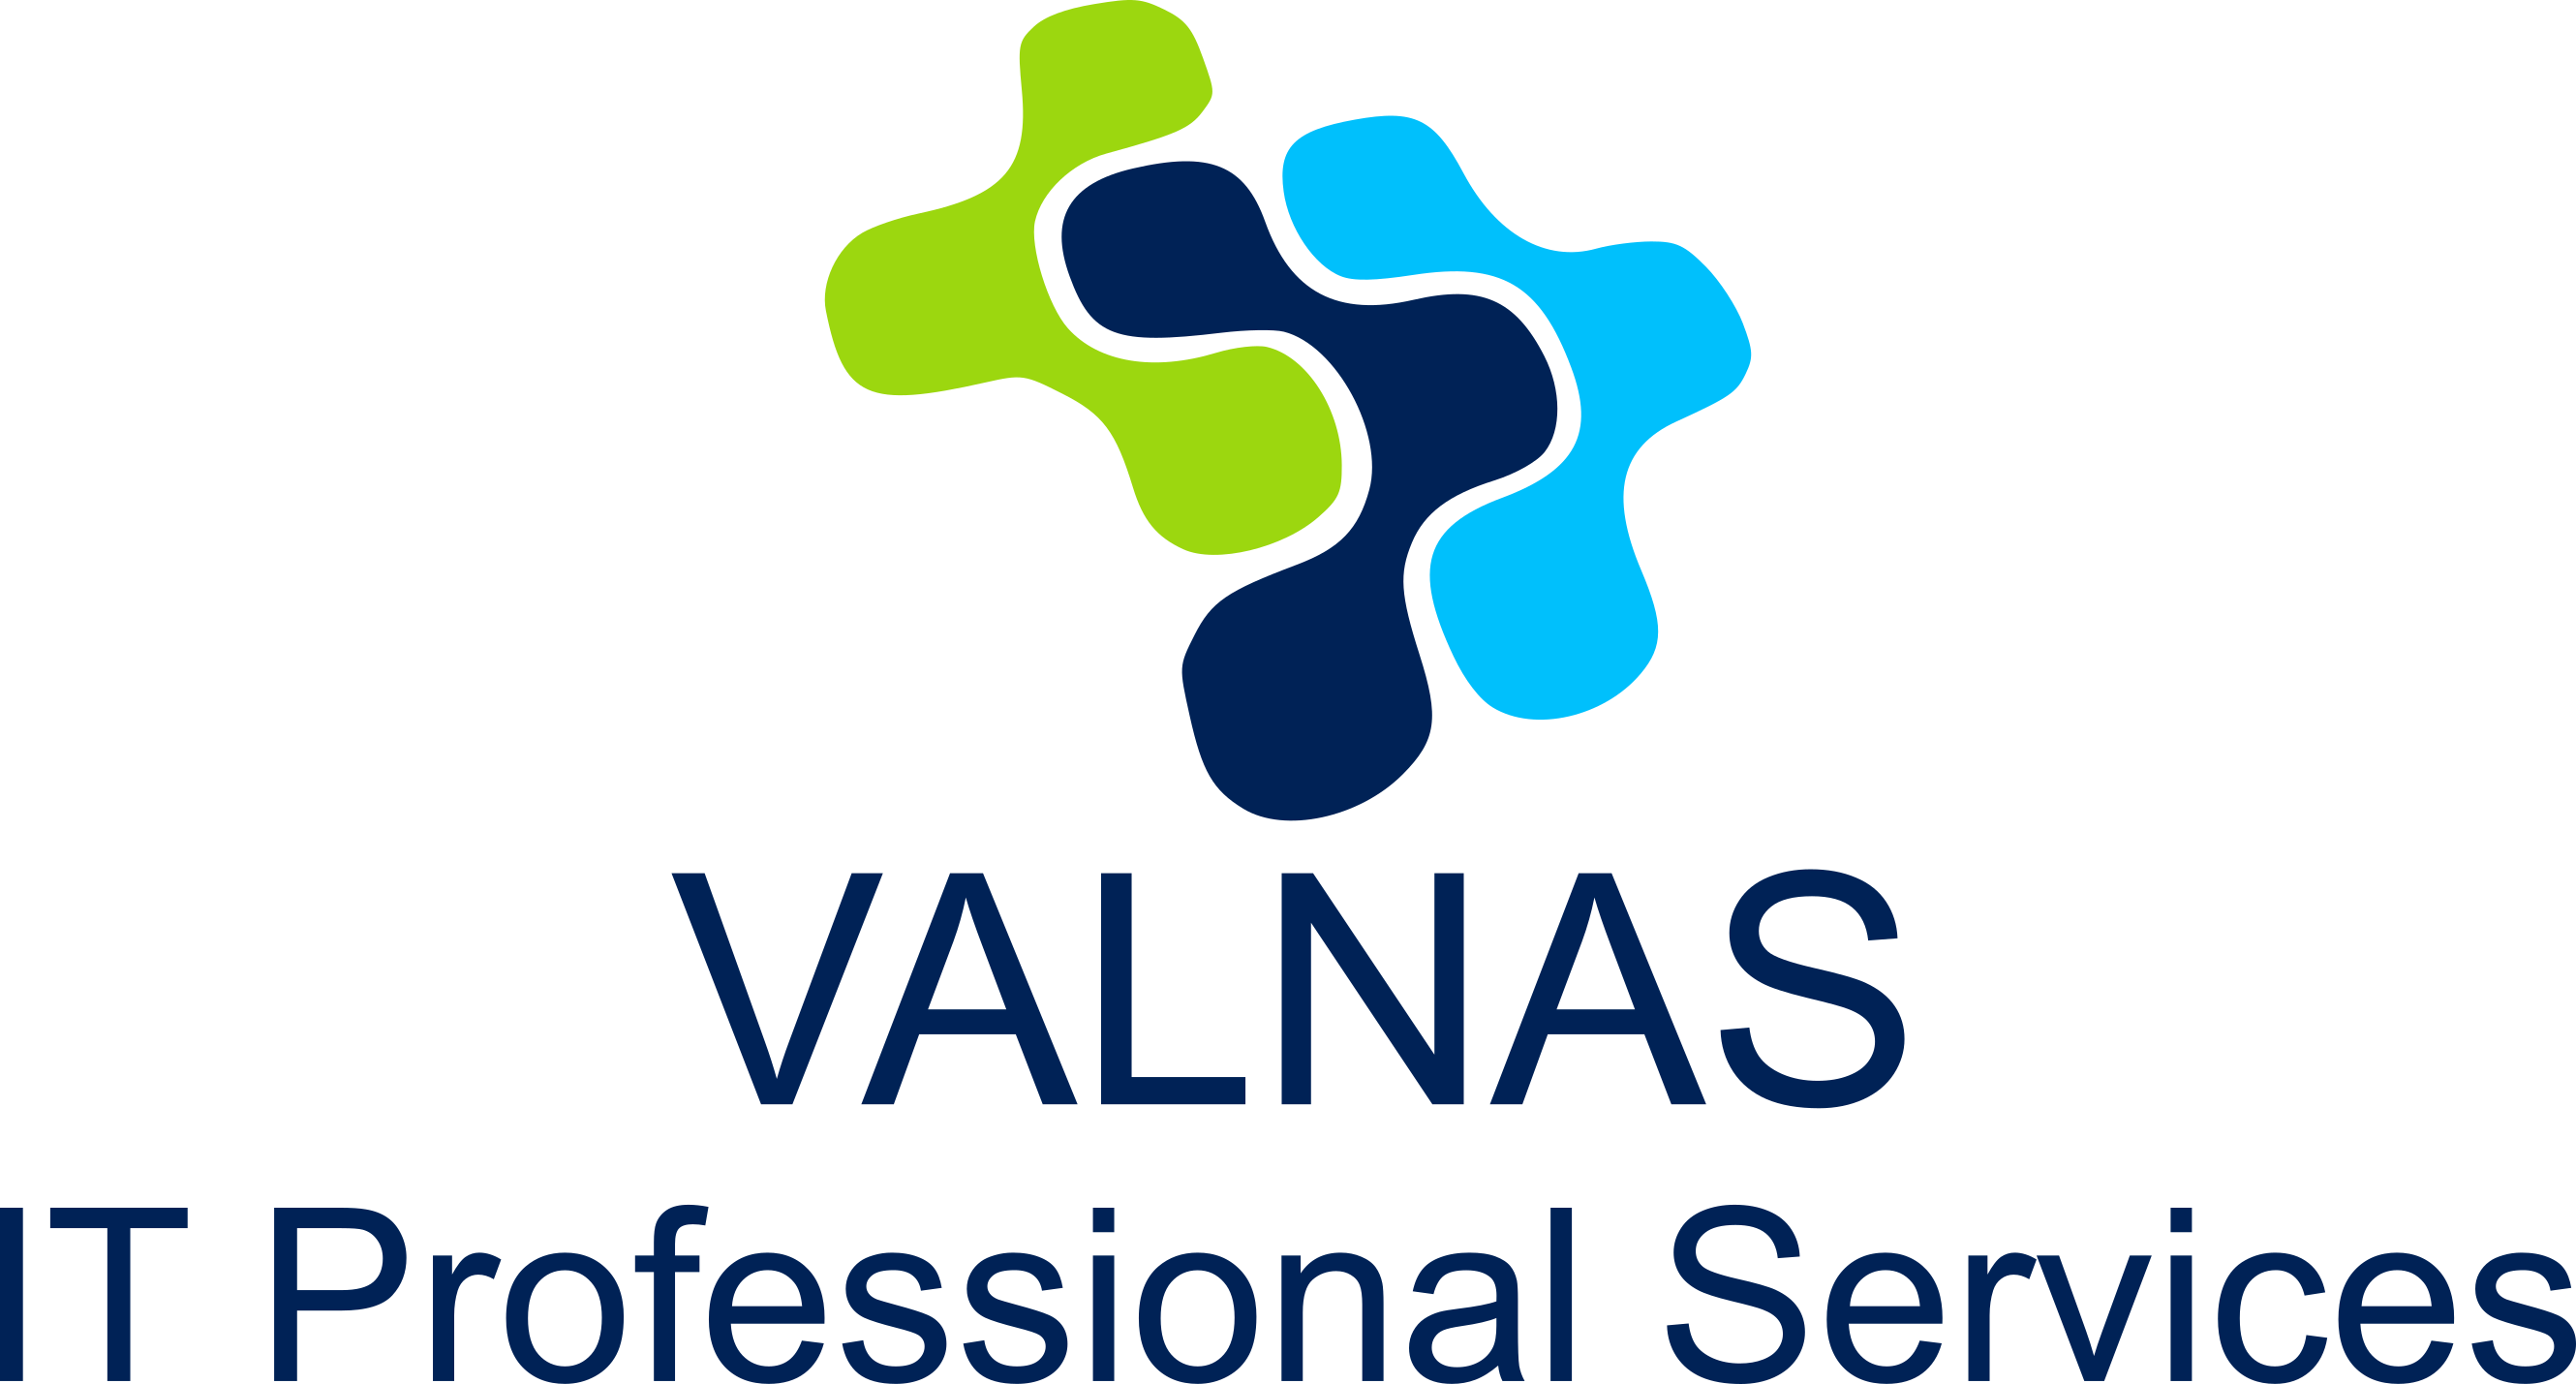 Valnas IT Professional Services